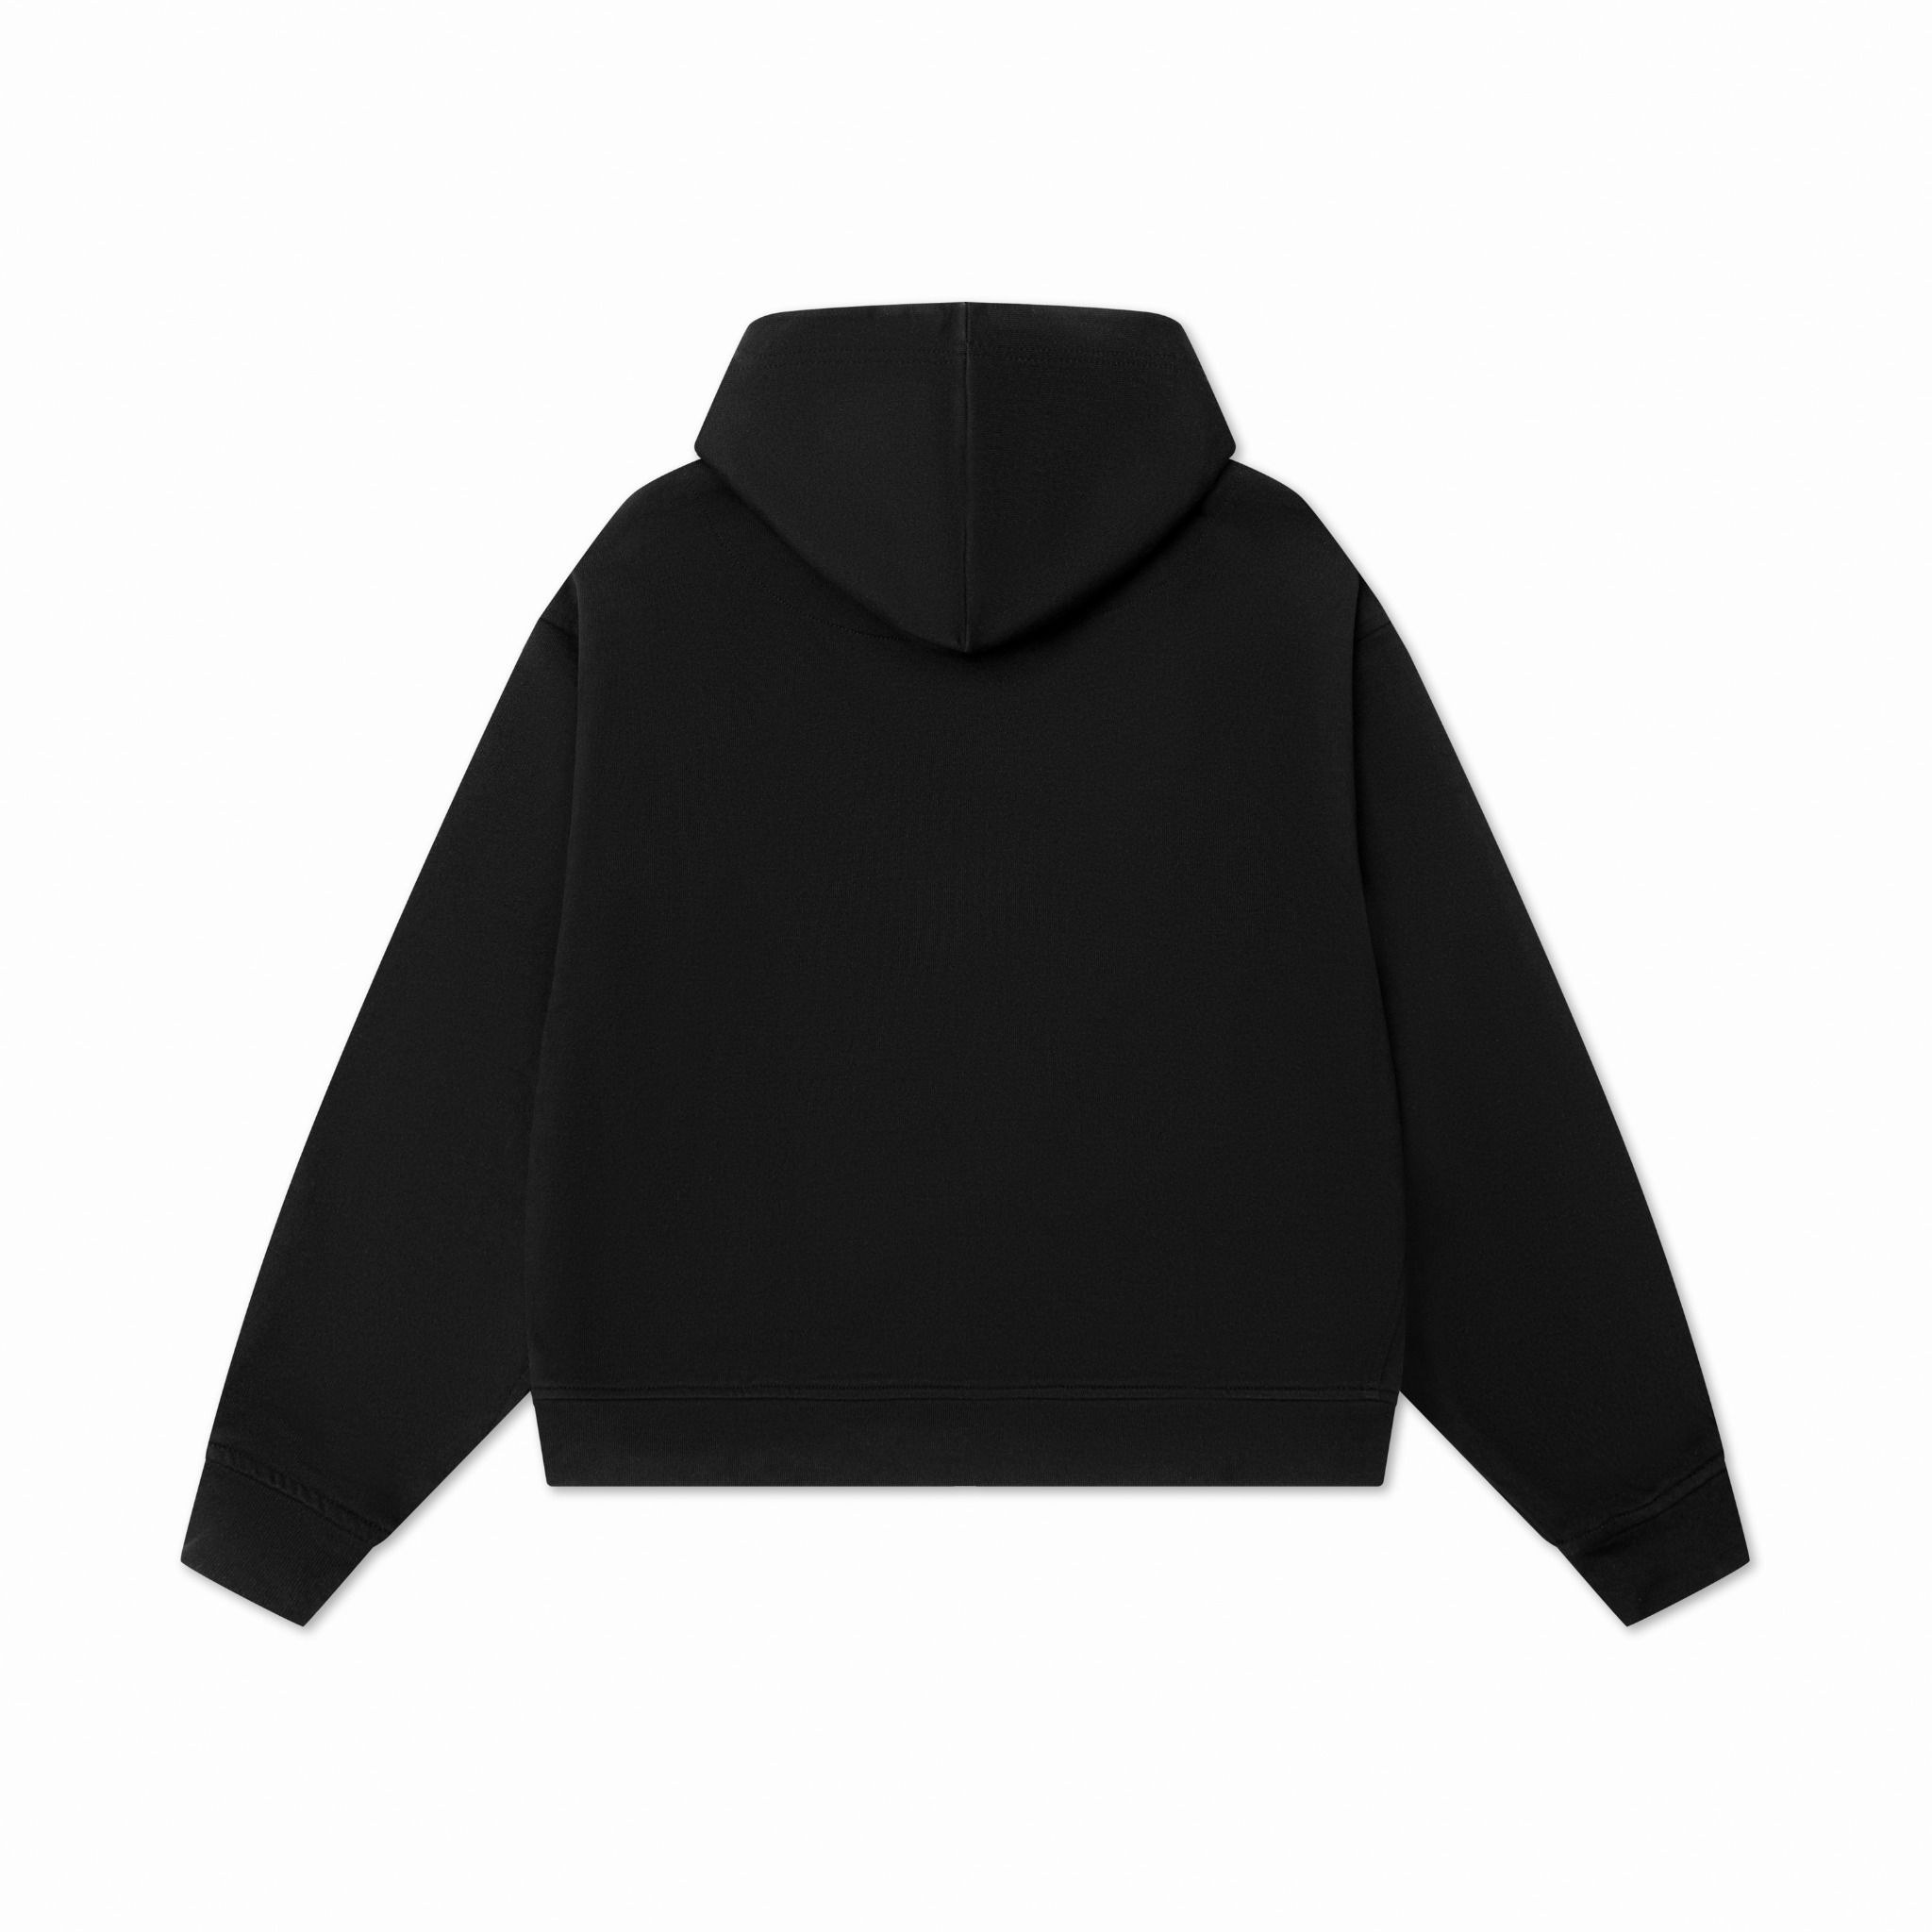  23'FZ hoodie / Black / Eclipse 